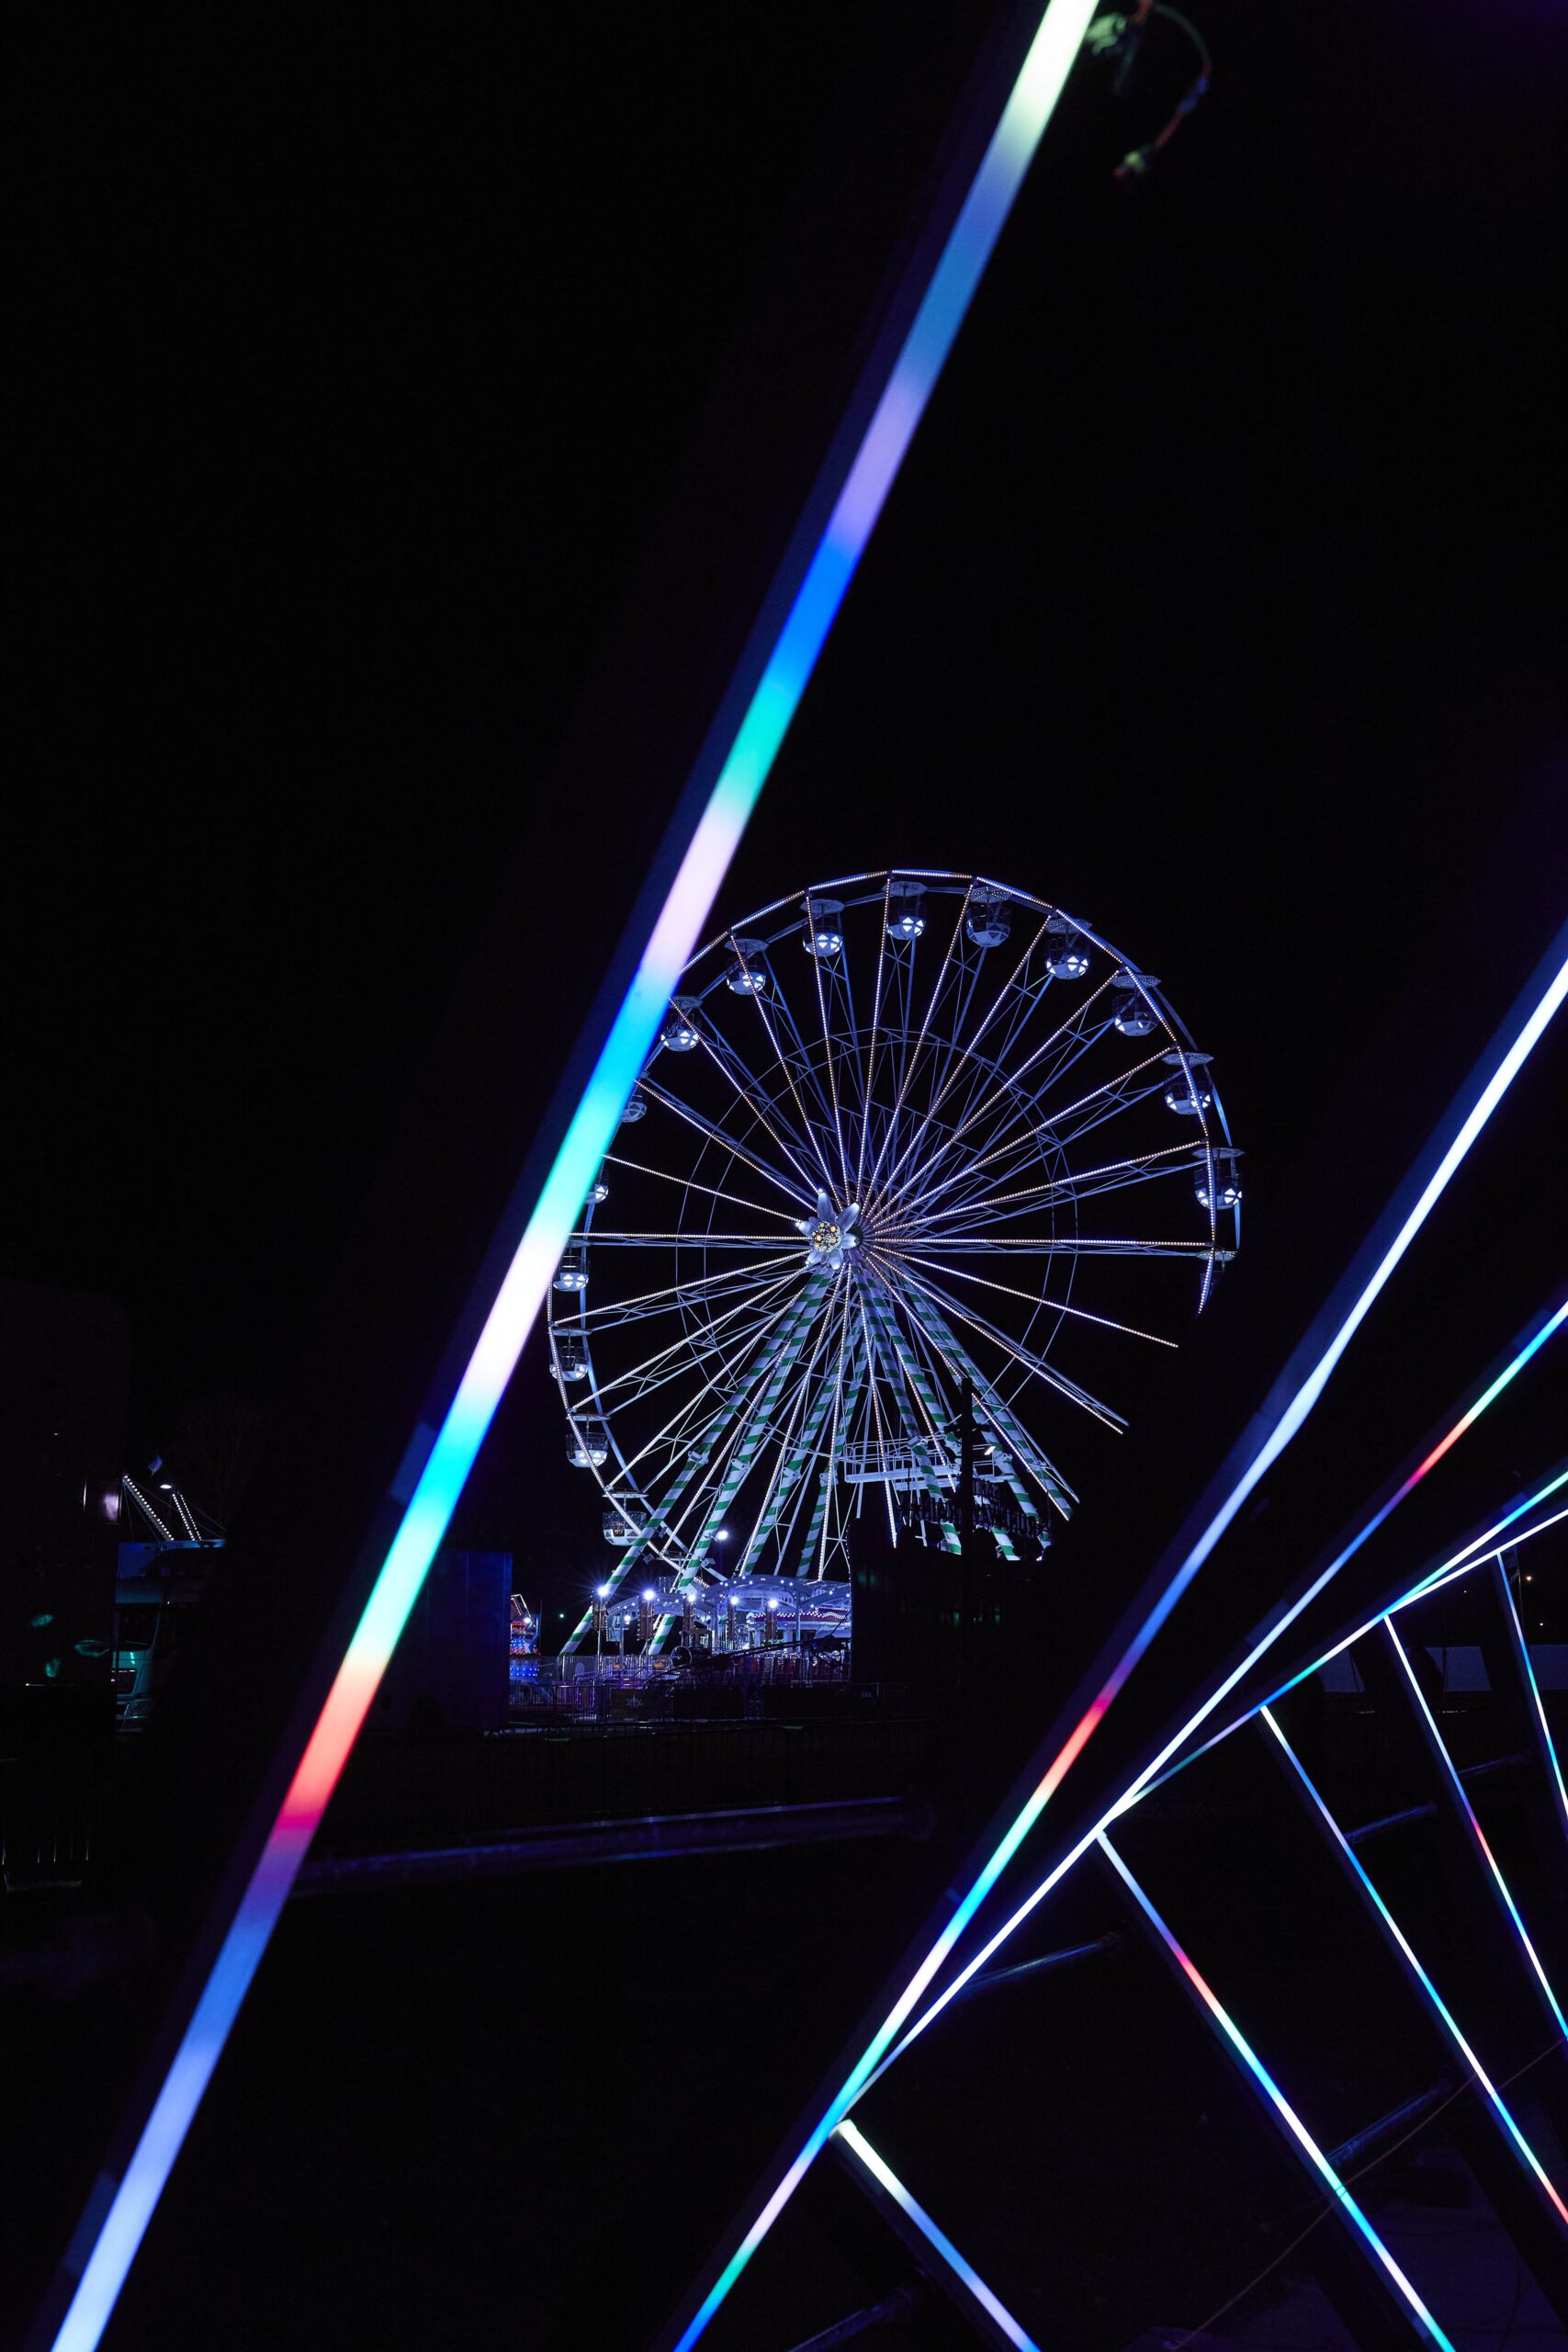 an illuminated big wheel ride